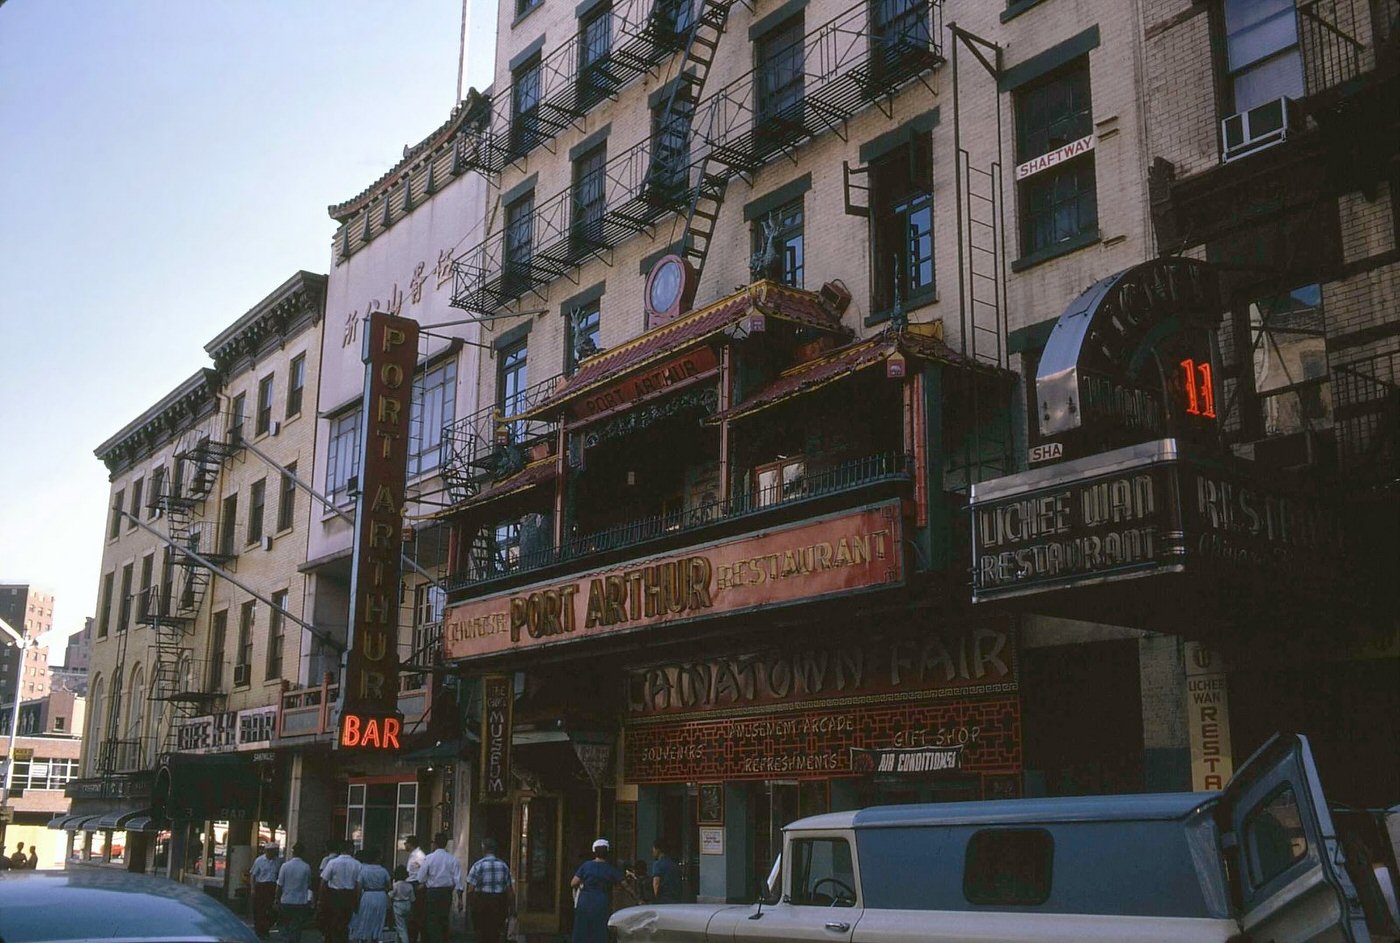 Port Arthur Restaurant NYC, 1962